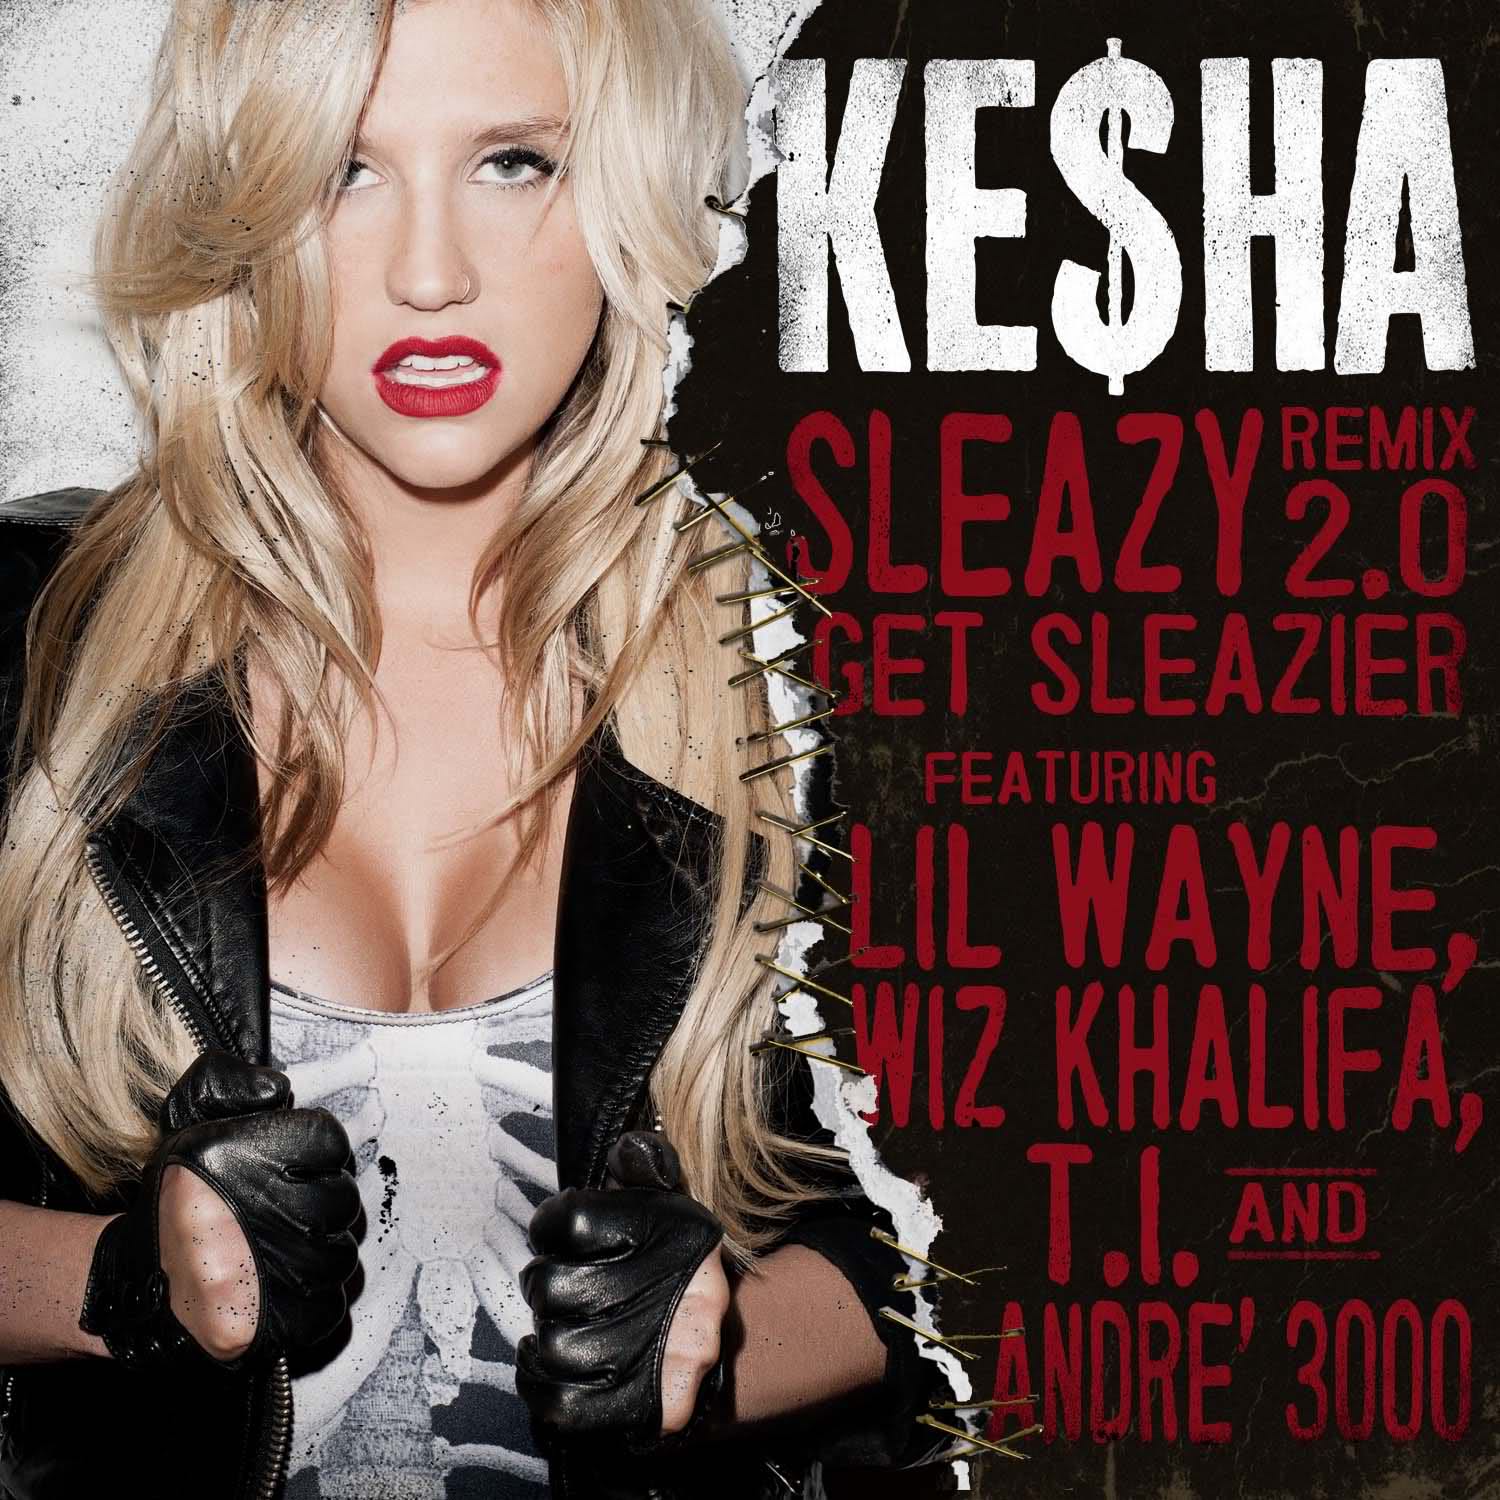 Kesha featuring Lil Wayne, Wiz Khalifa, T.I., & André 3000 — Sleazy Remix 2.0: Get Sleazier cover artwork